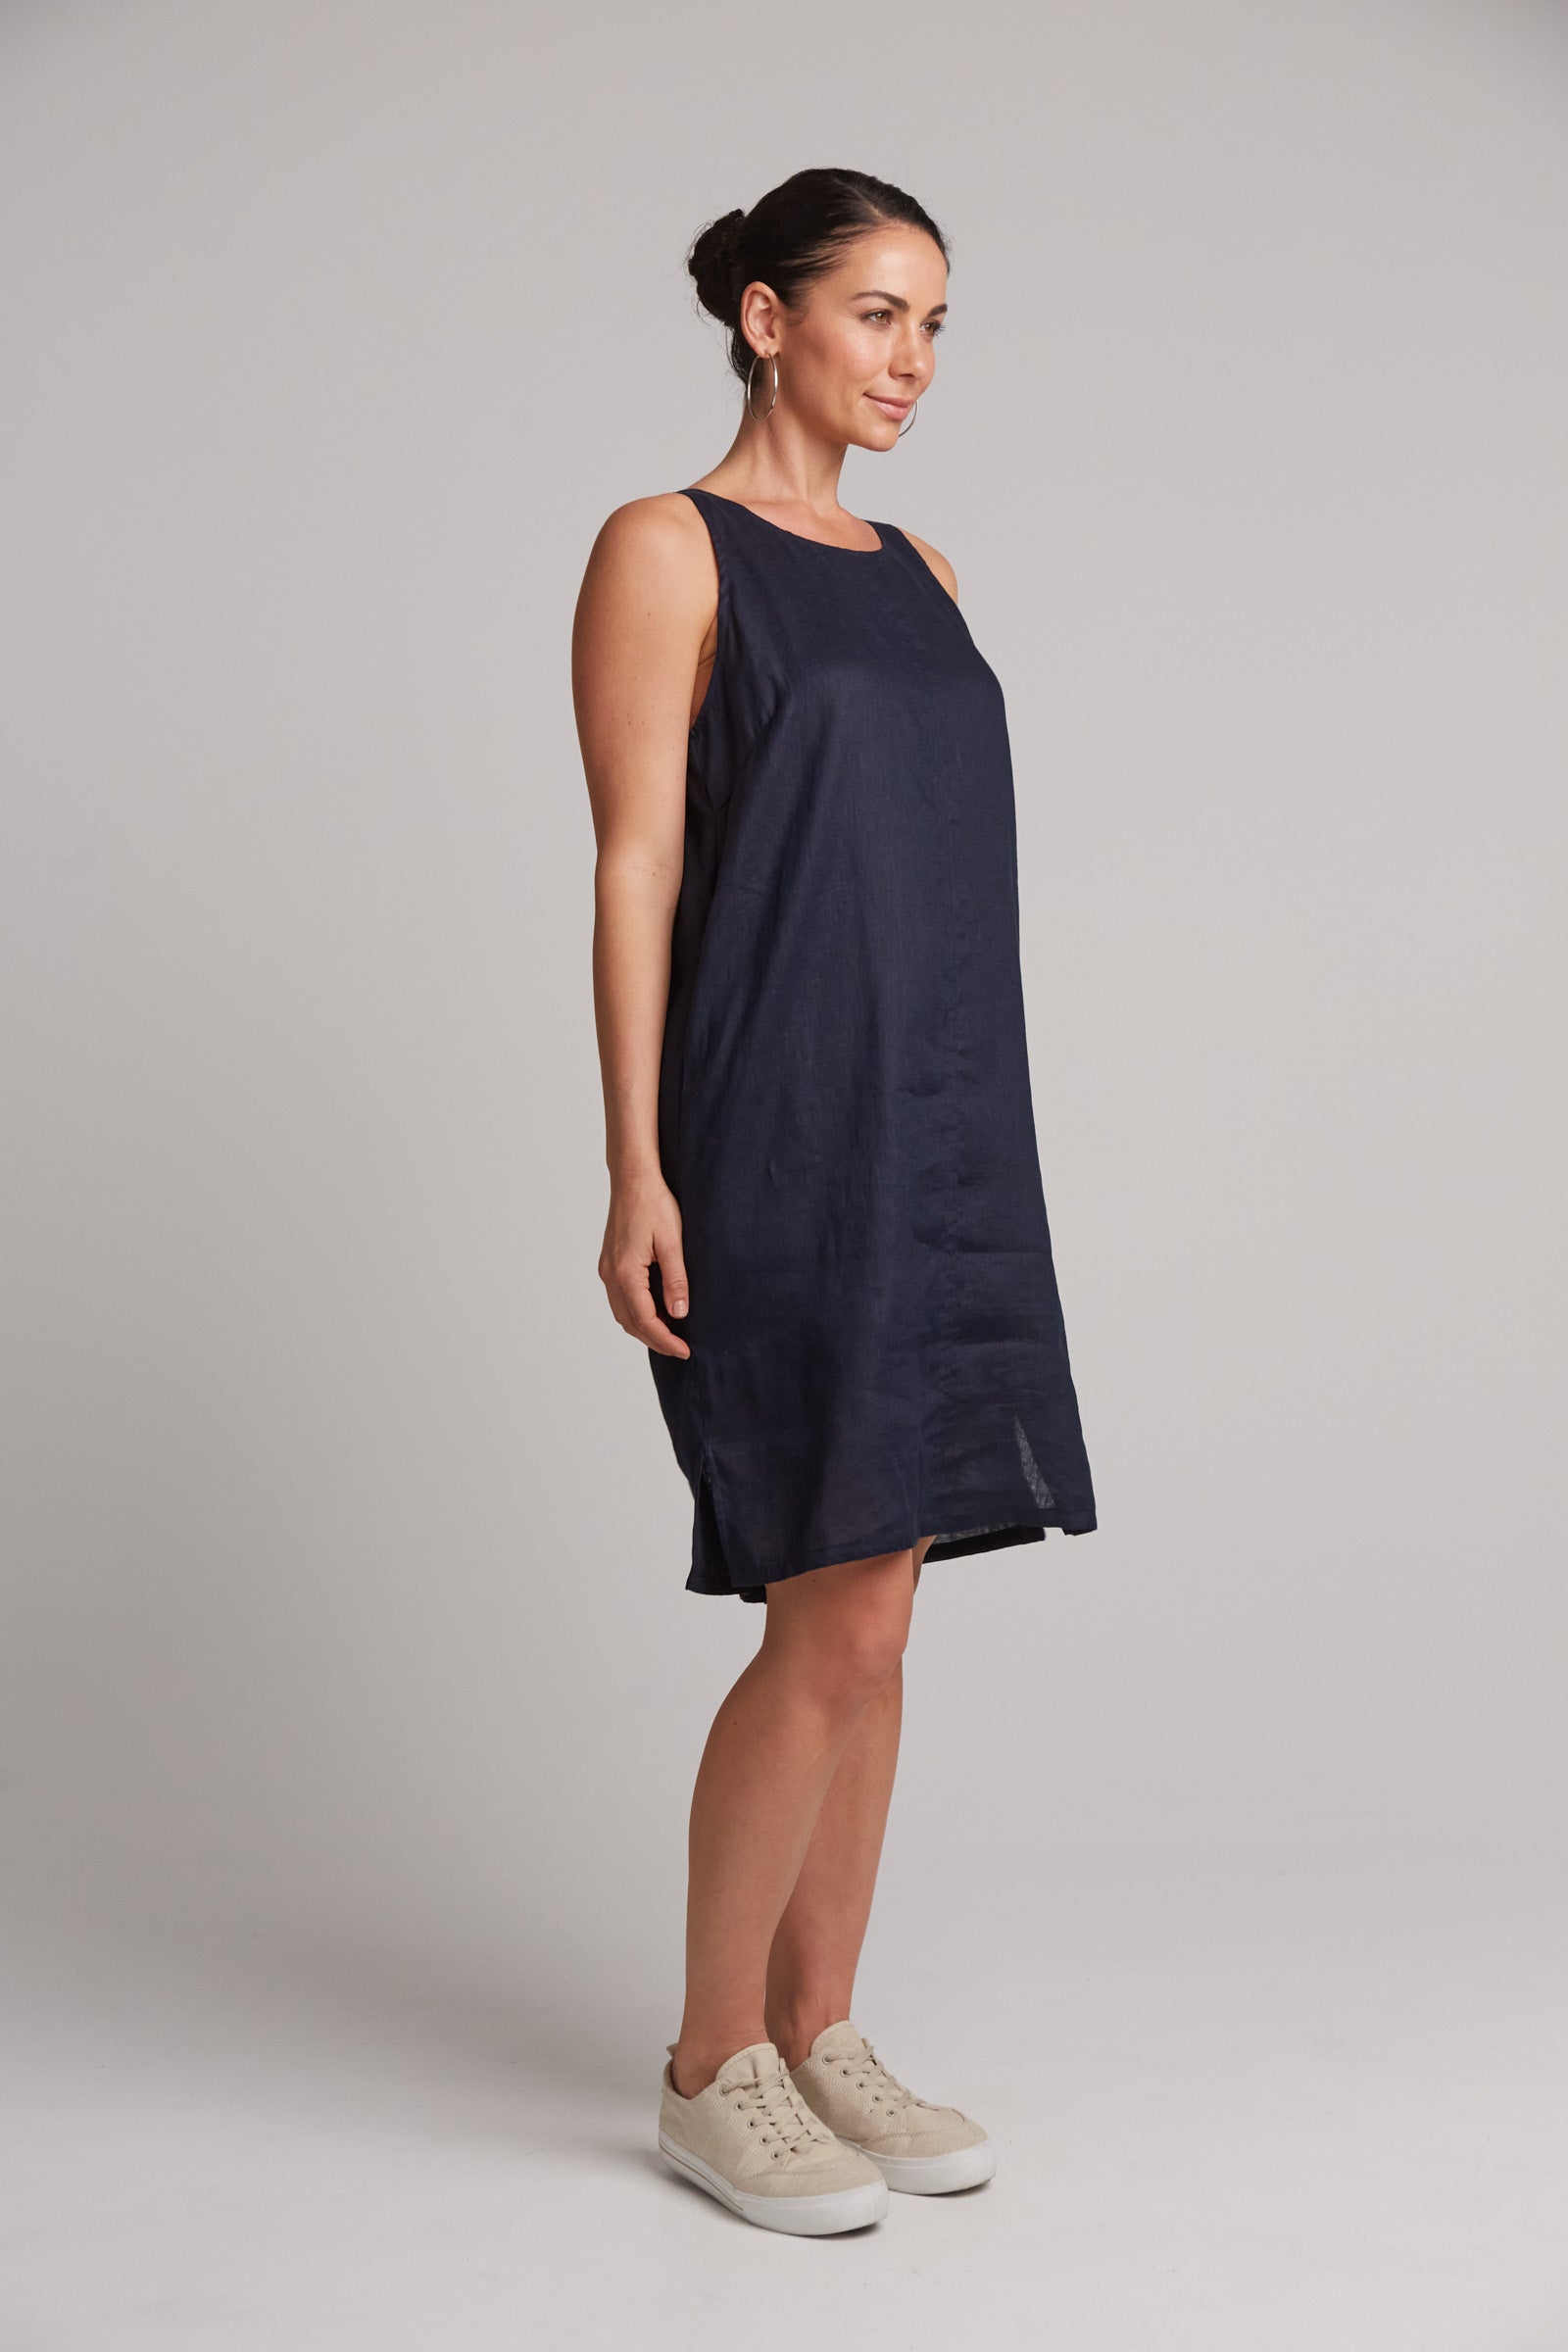 Studio Midi Dress - Navy - eb&ive Clothing - Dress Mid Linen